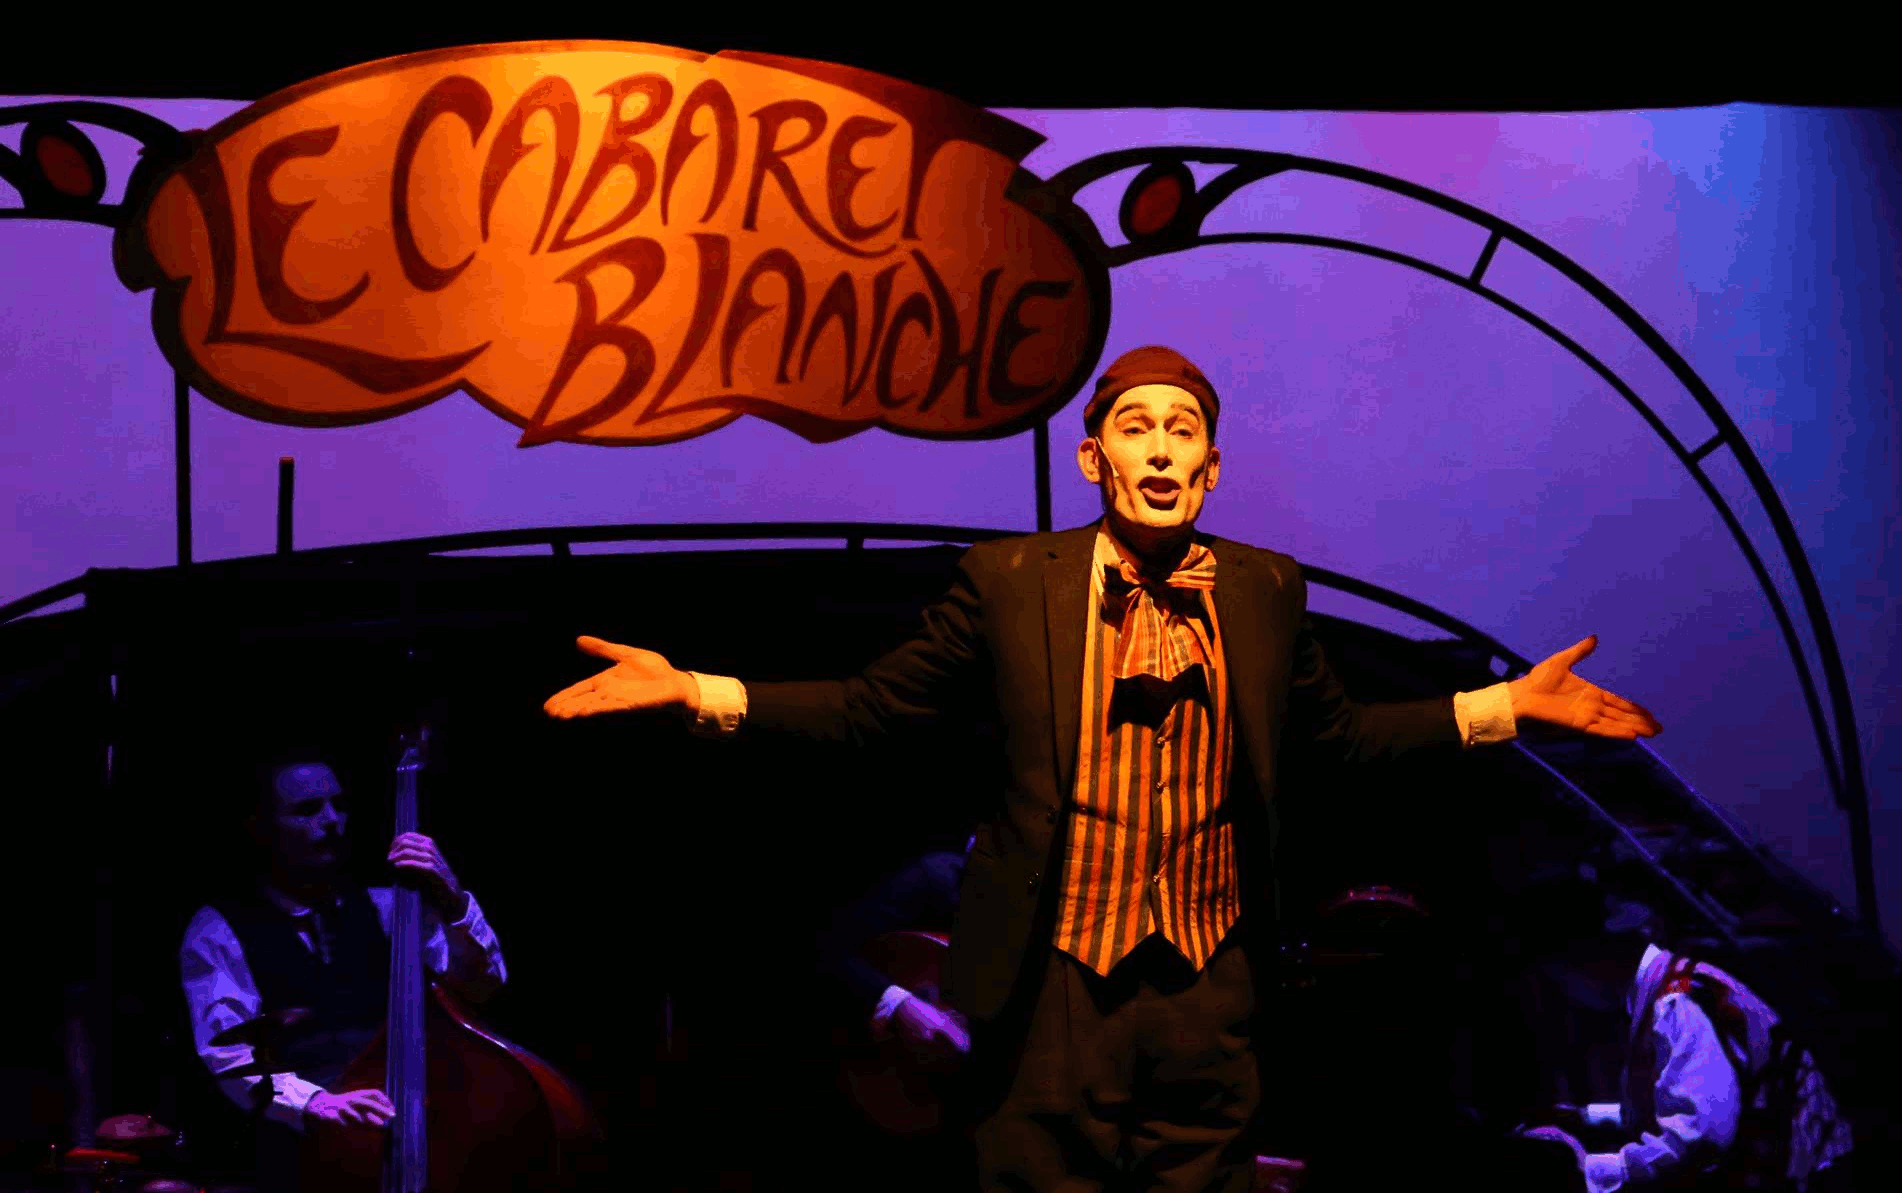 Cabaret Blanche-Pierre Babolat-01